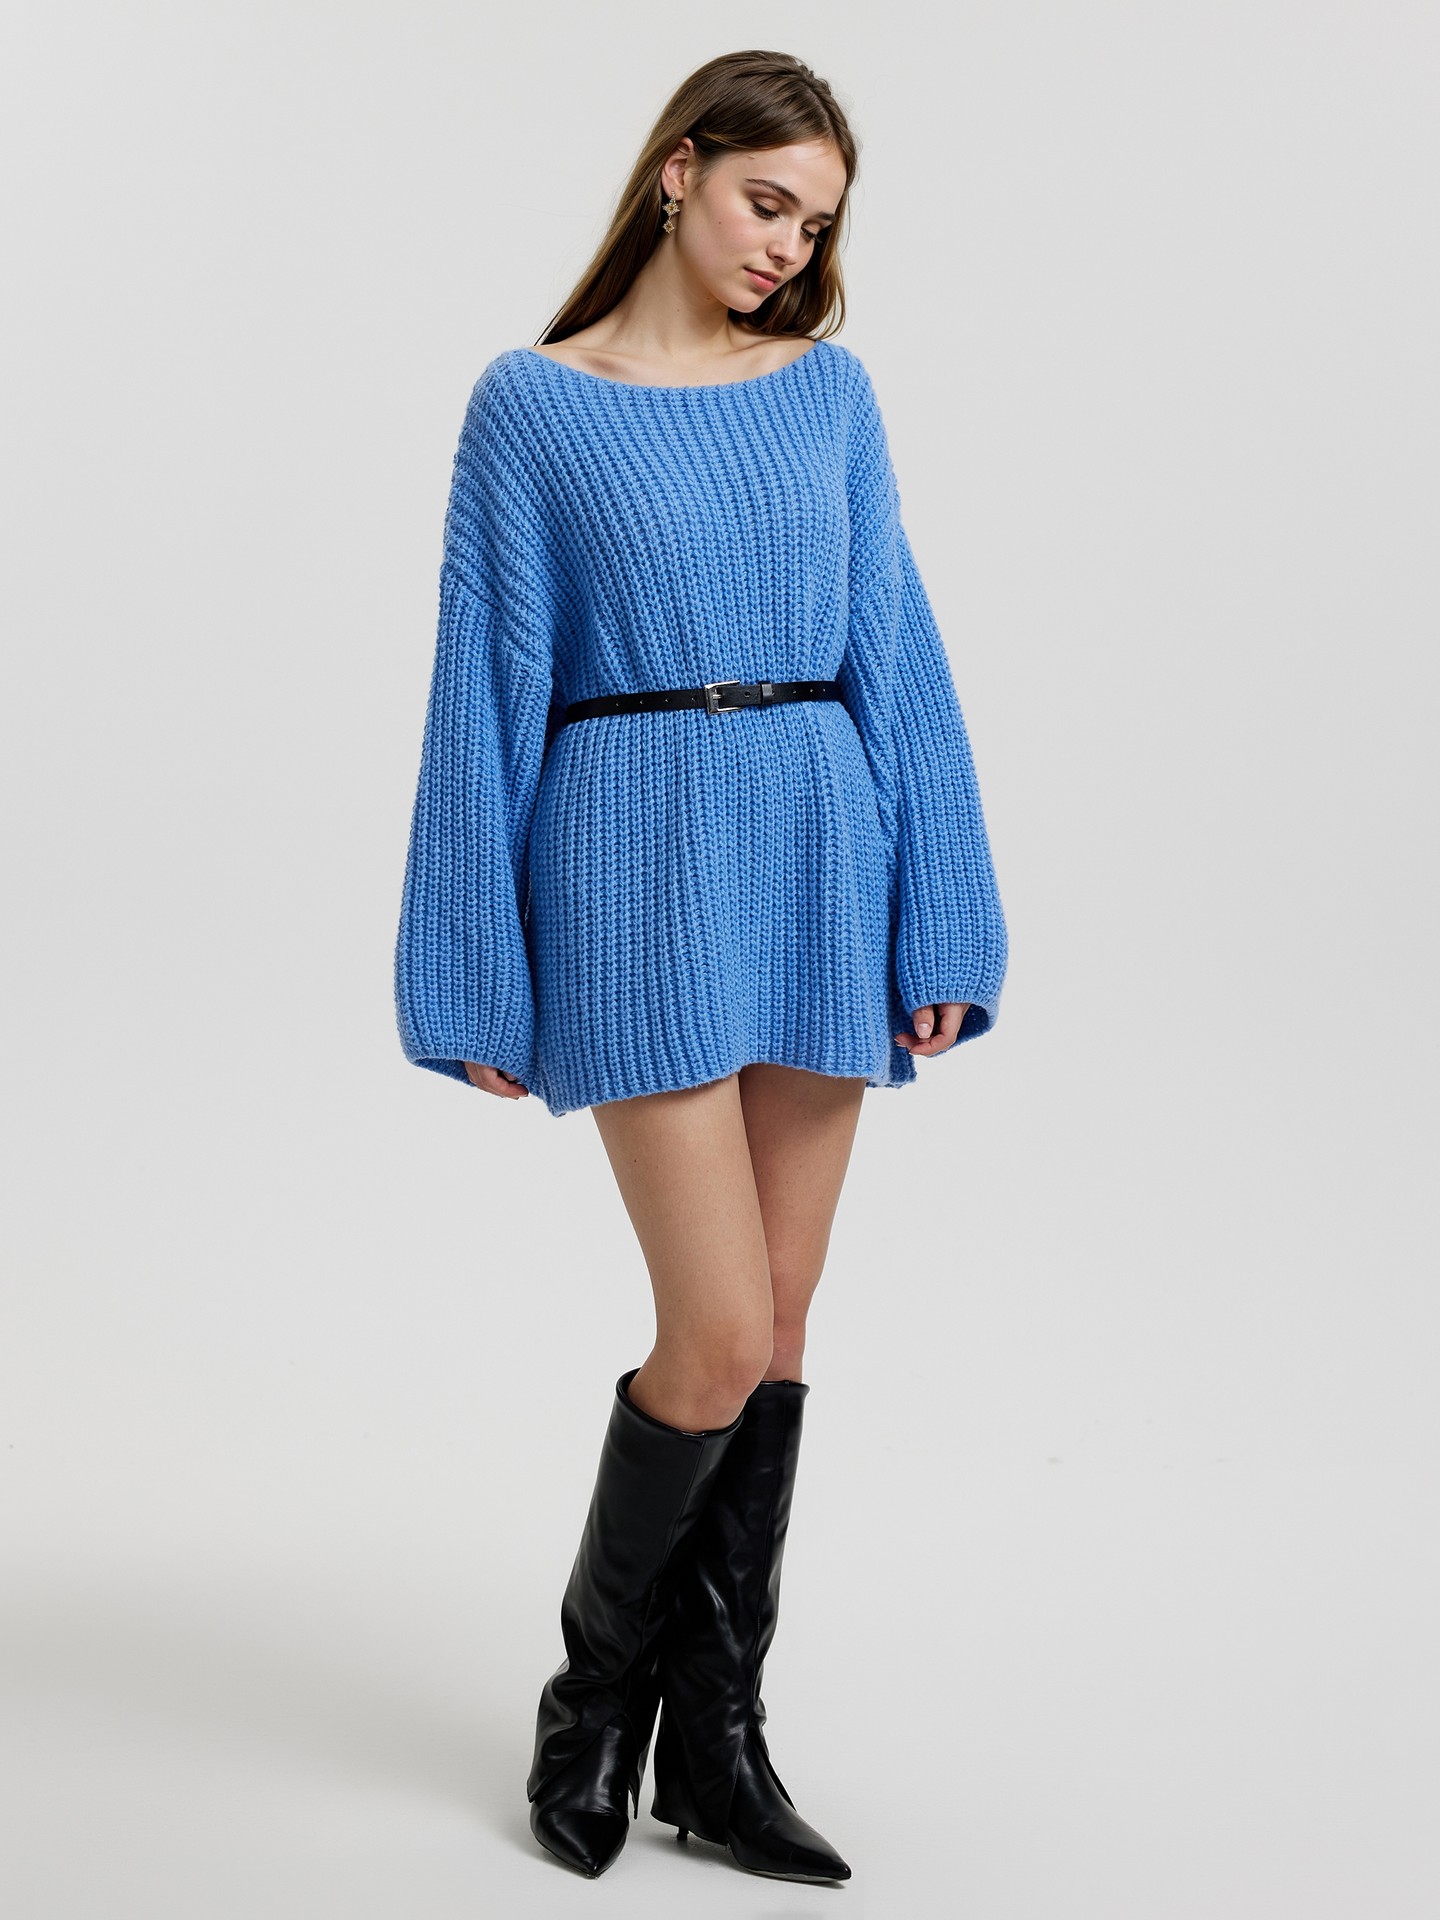 Belted Knit Pullover丨Urbanic